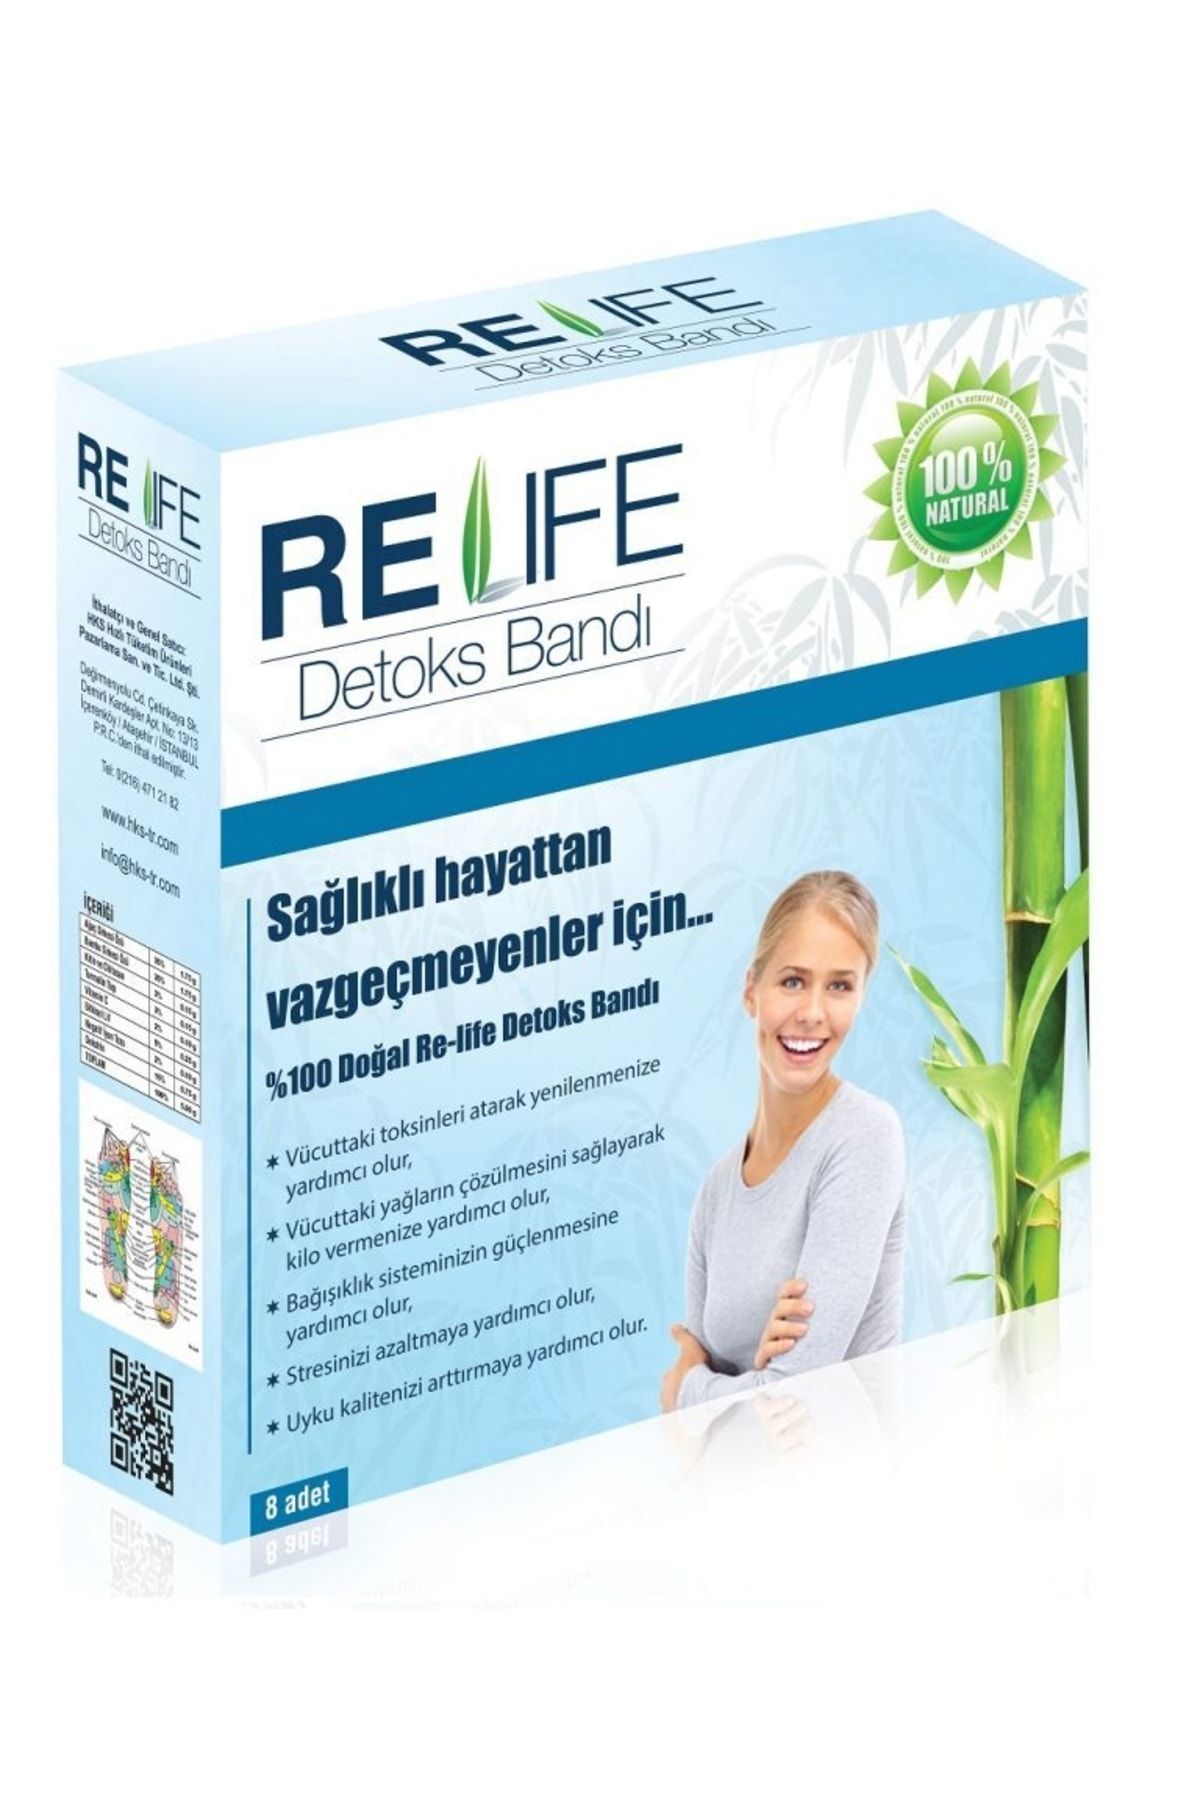 Relife Re-life Detoks ( Detox ) Bandı Natural %100 Doğal Ürün